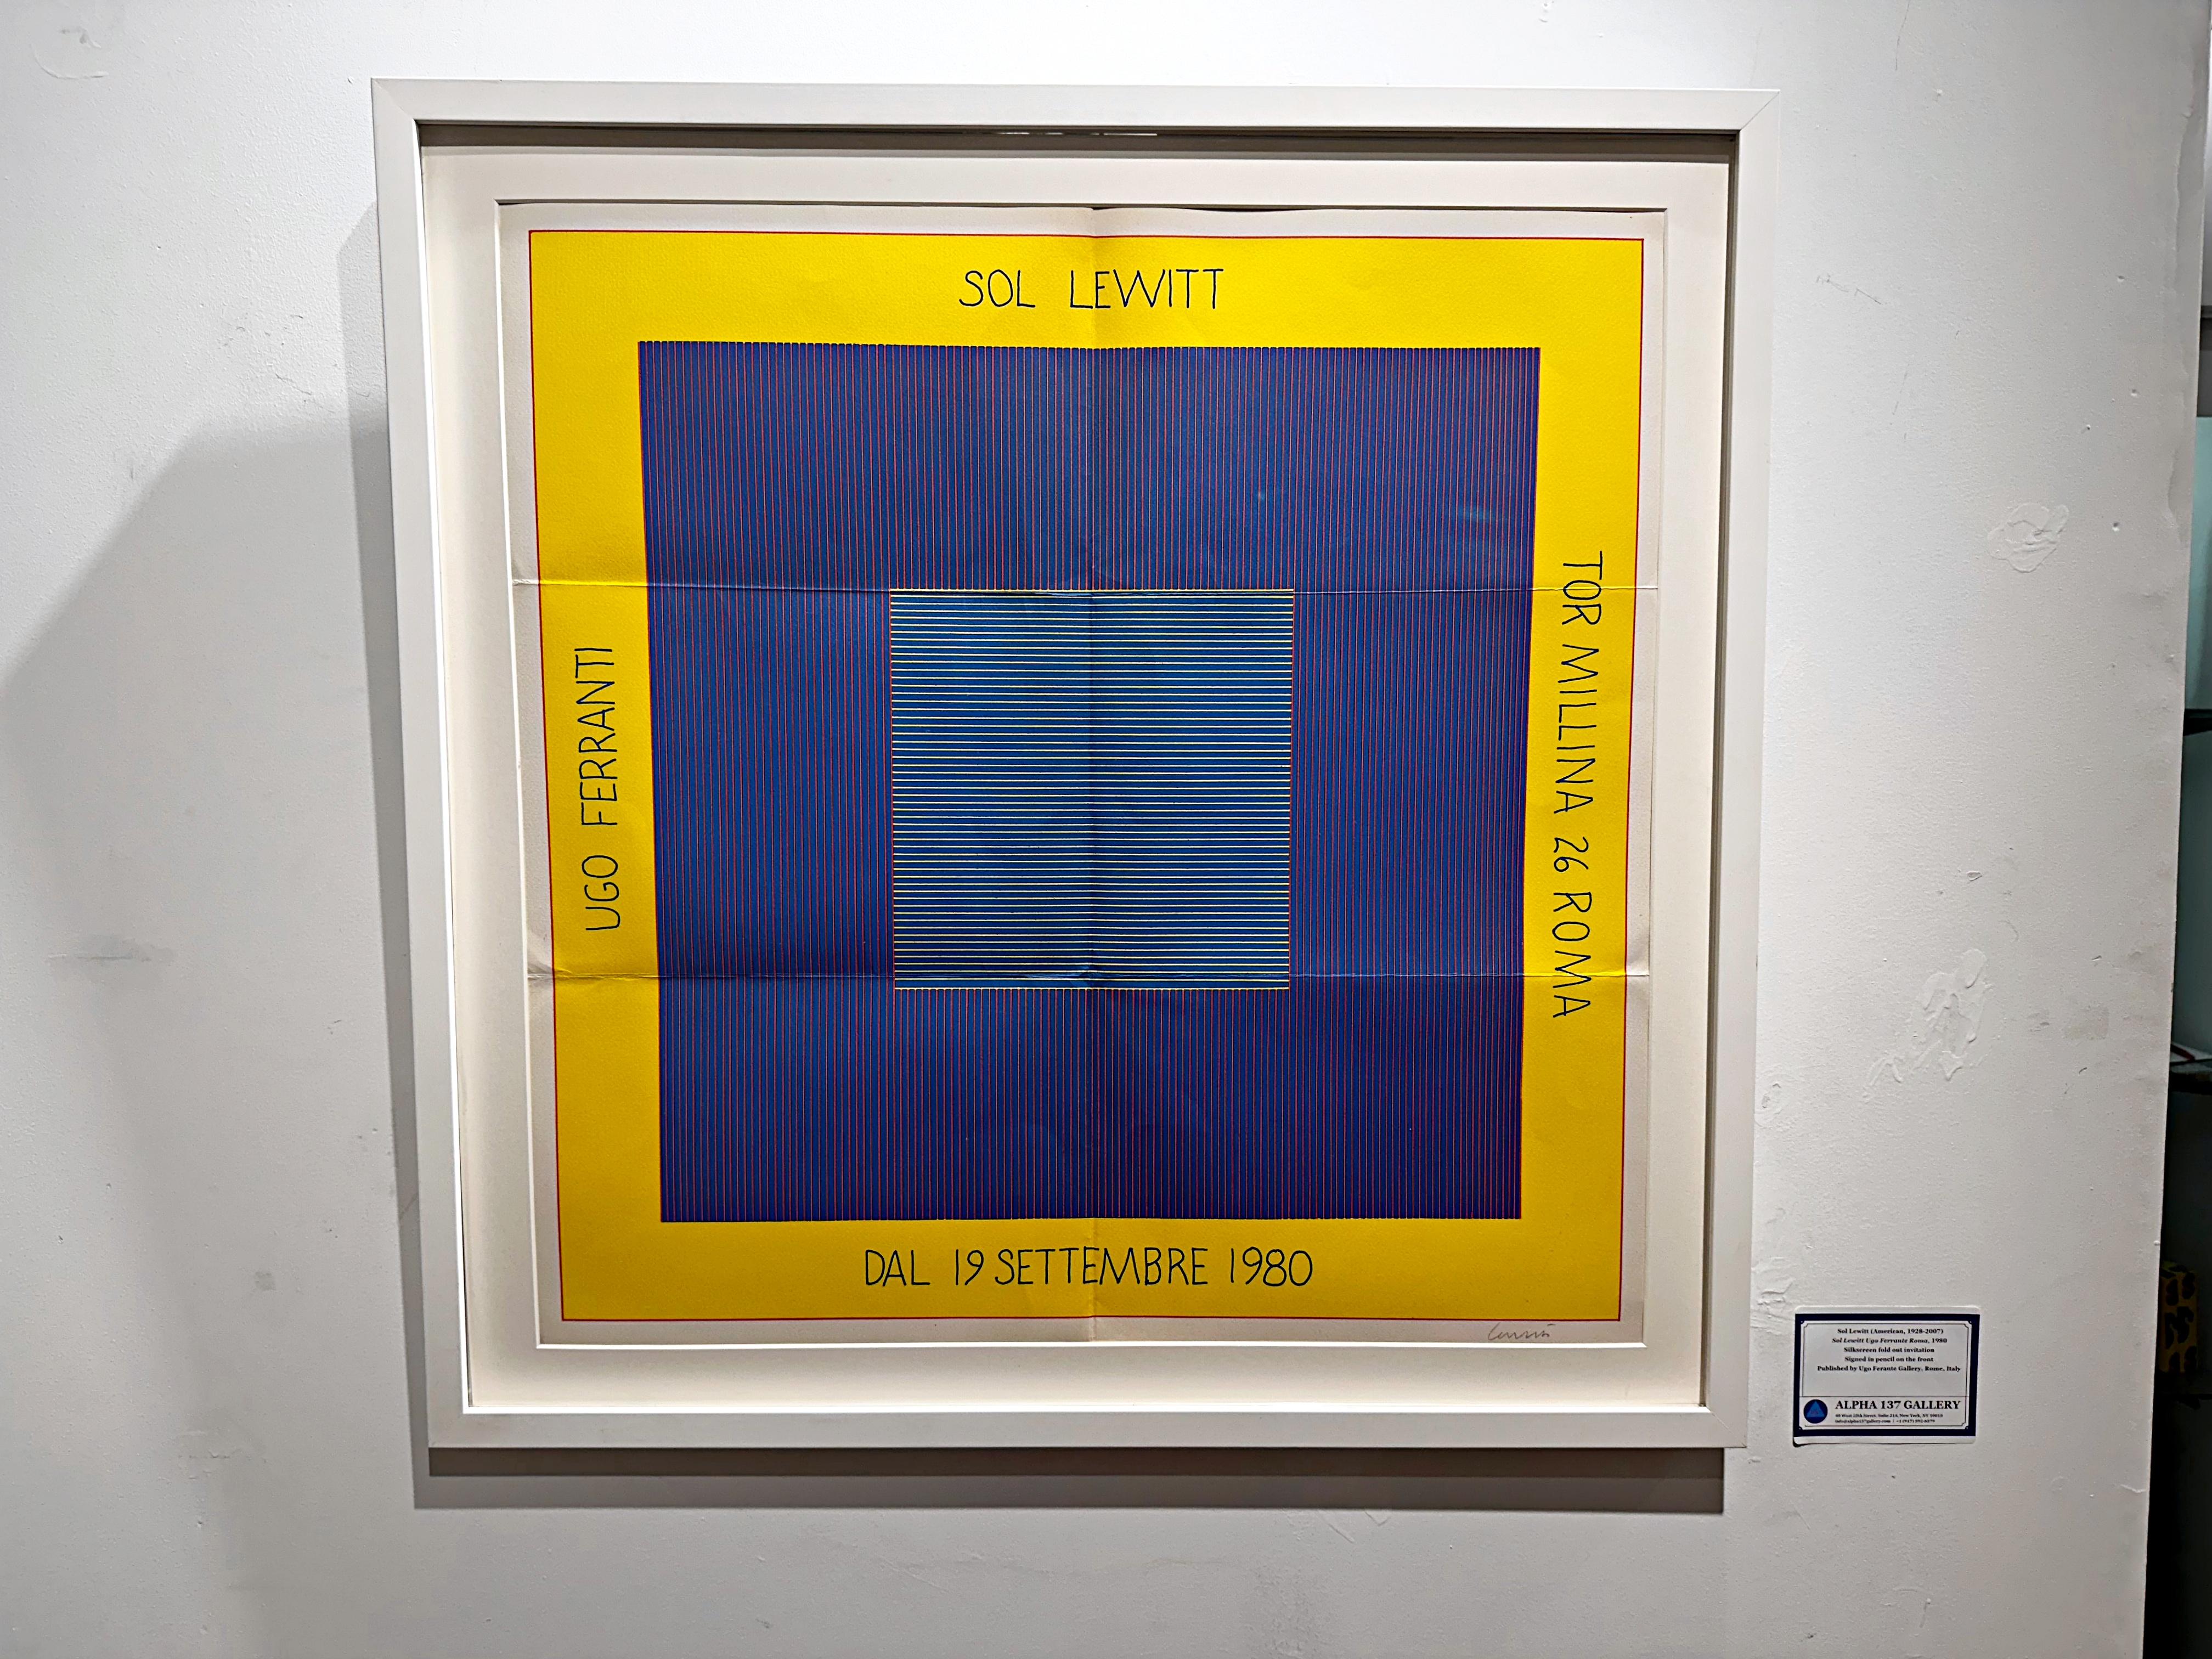 Rare Italian exhibition invitation Ugo Ferranti hand signed by Sol Lewitt Framed - Print by Sol LeWitt